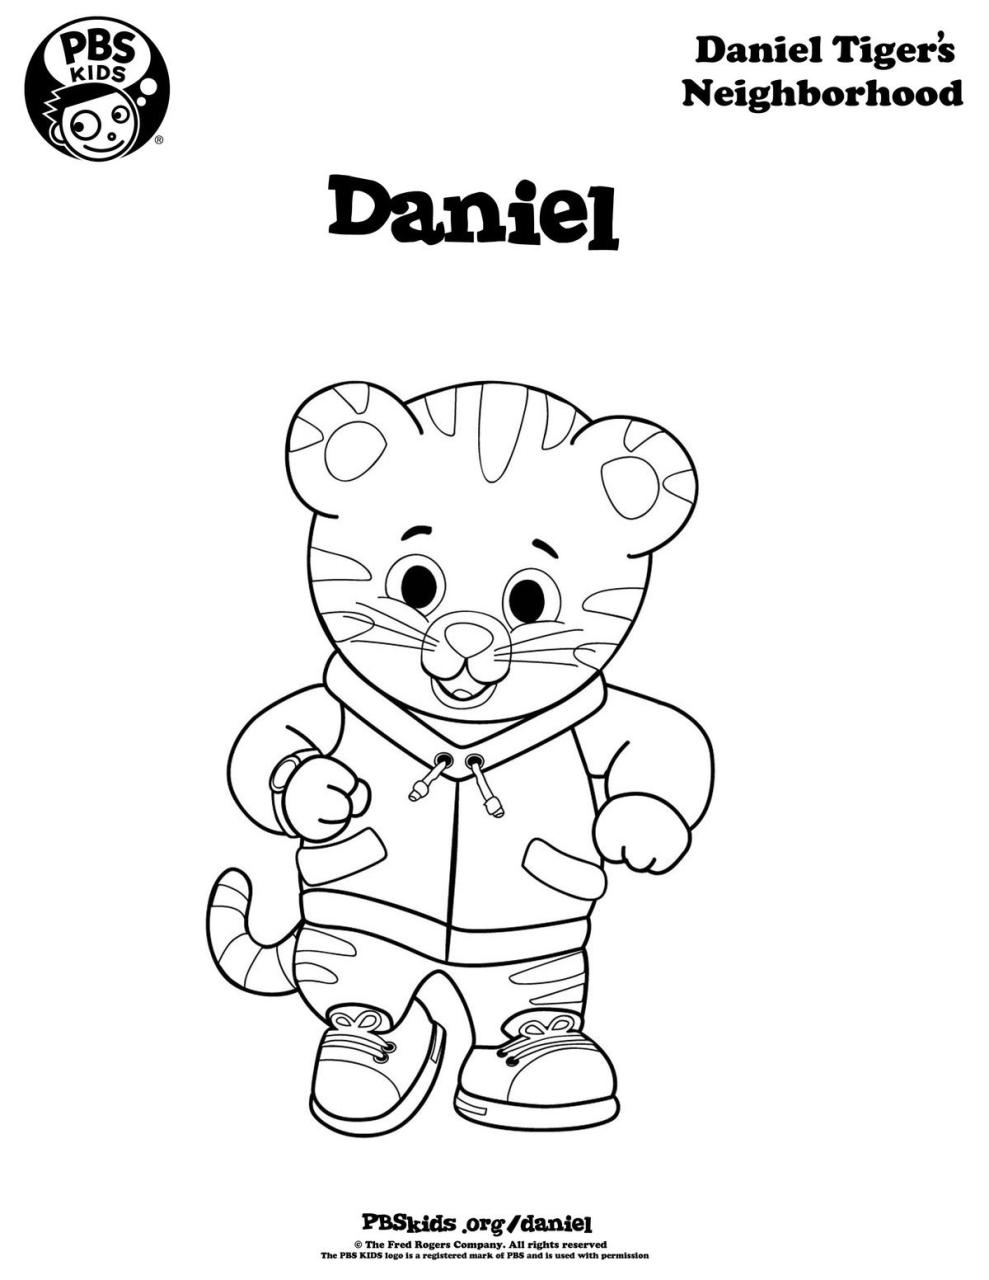 Daniel Tiger Coloring Pages